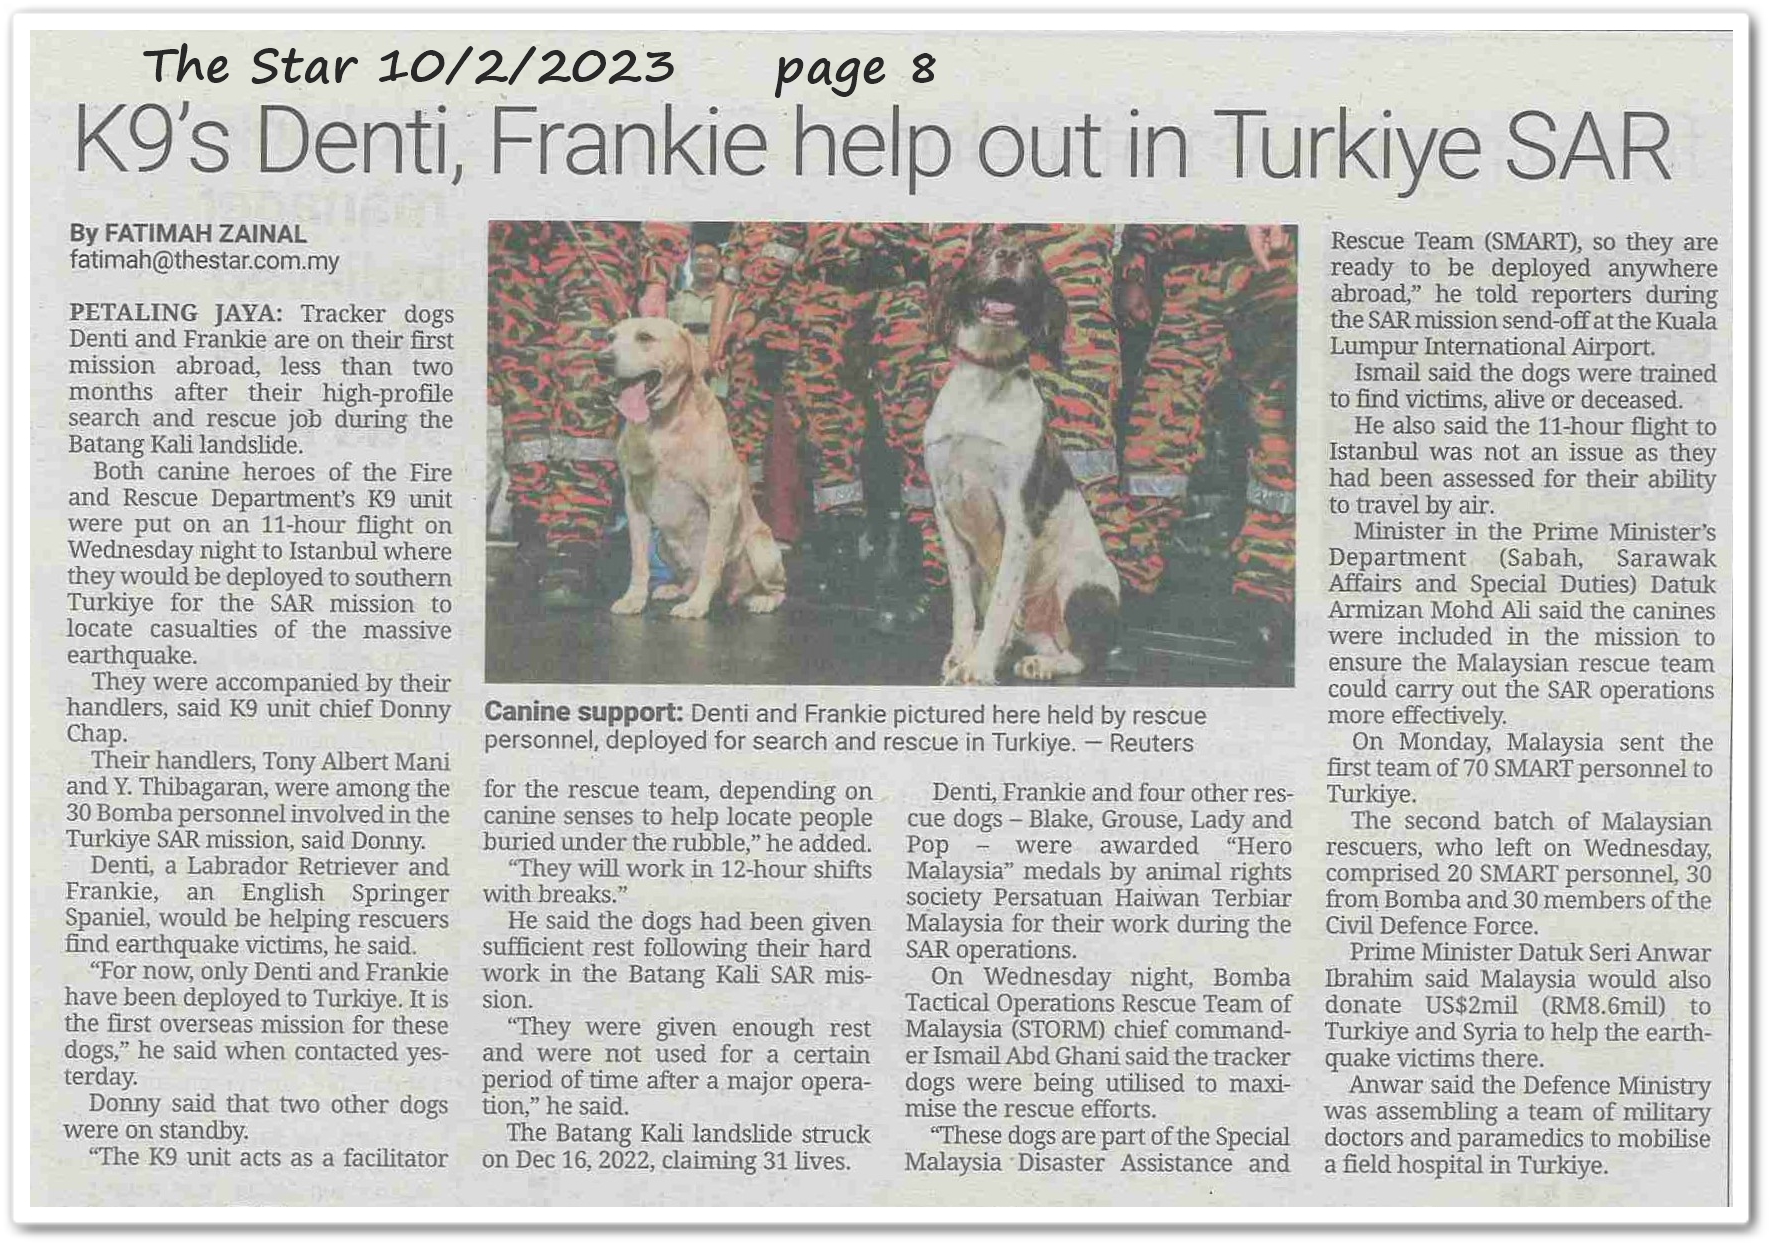 K9's Denti, Frankie help out in Turkiye SAR - Keratan akhbar The Star 10 February 2023